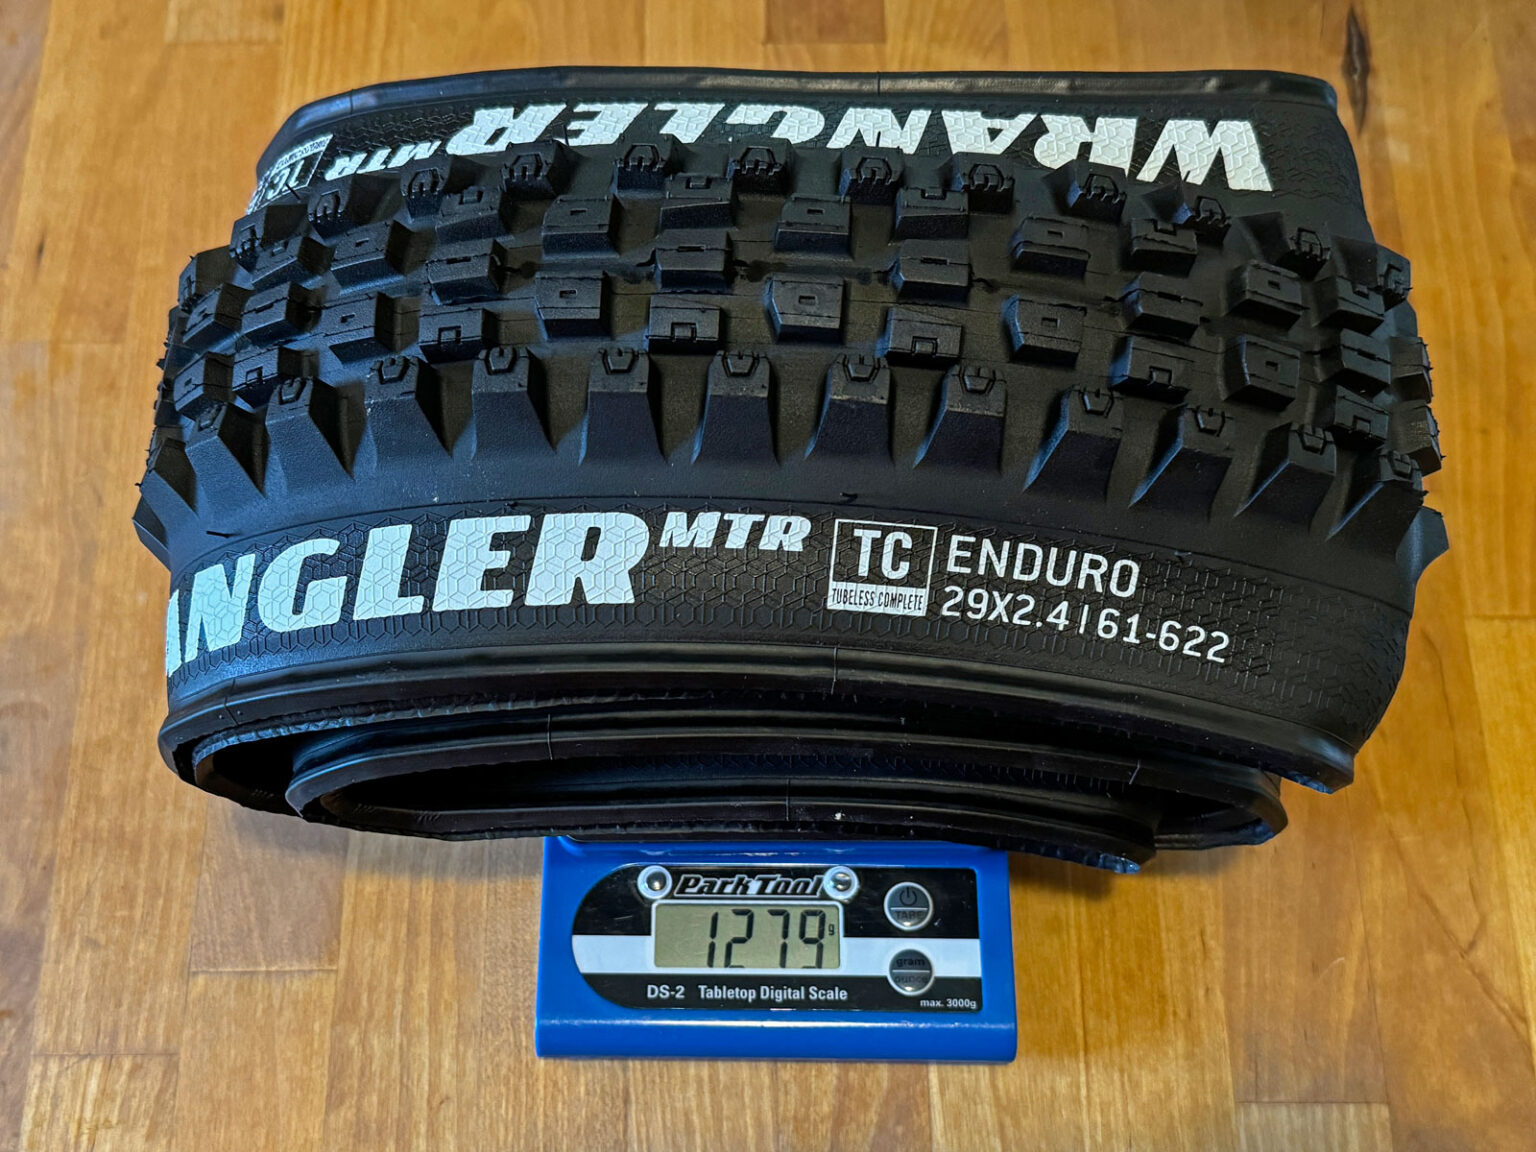 Goodyear Wrangler enduro mountain bike tires, 1279g actual weight 29x2.4" rear